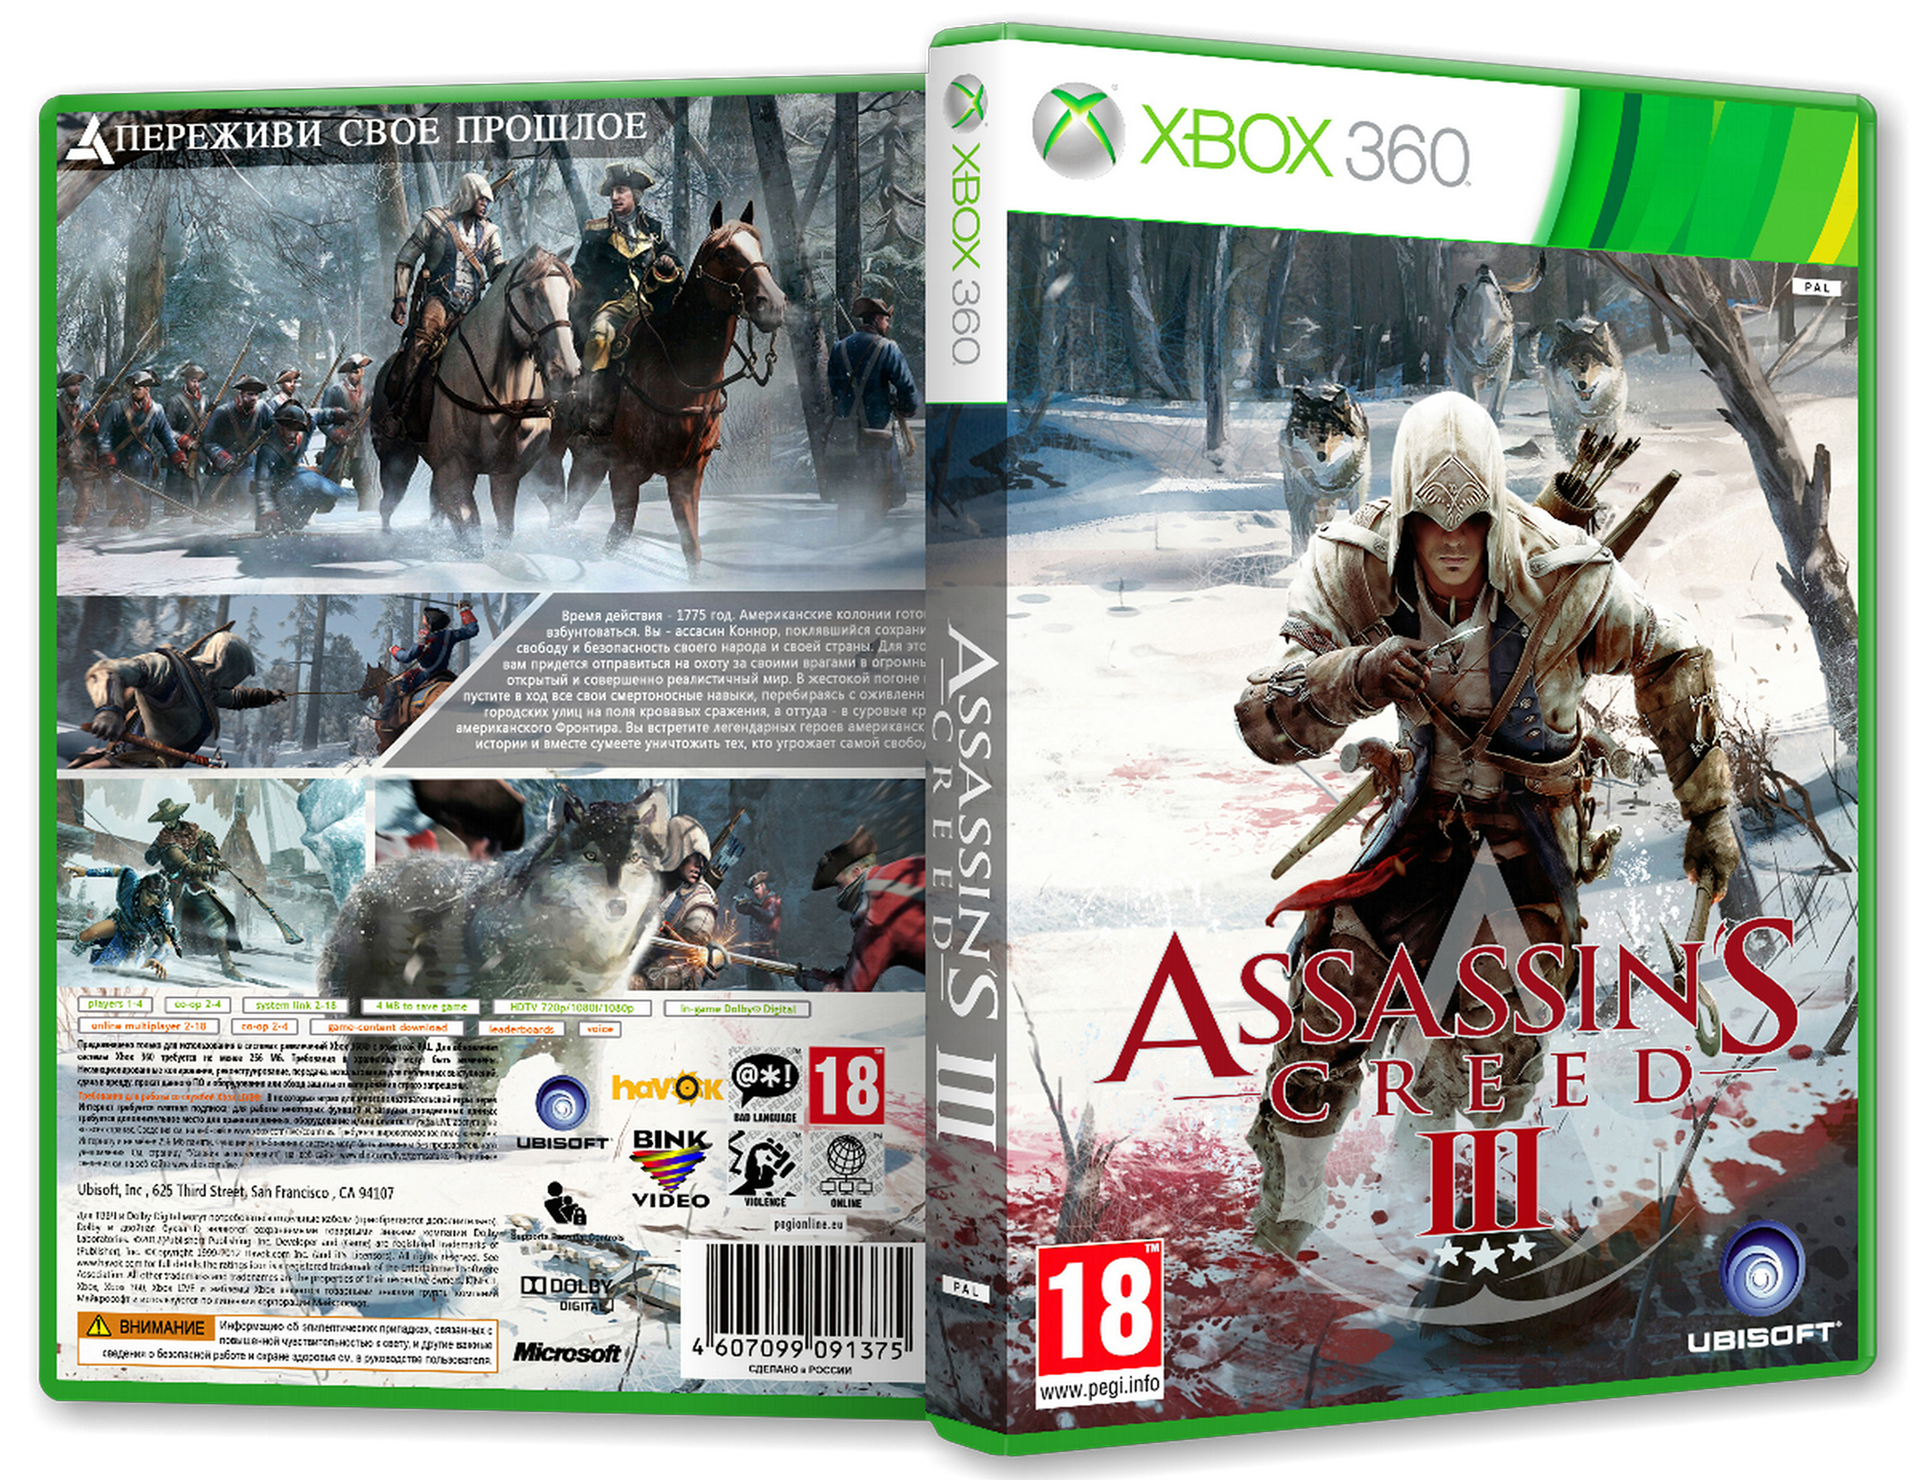 Assassin s xbox 360. Ассасин Крид 3 Xbox 360. Assassins Creed 3 [Xbox 360]. Ассасин Крид 3 на хбокс 360. Assassins Creed 3 диск для Xbox 360.